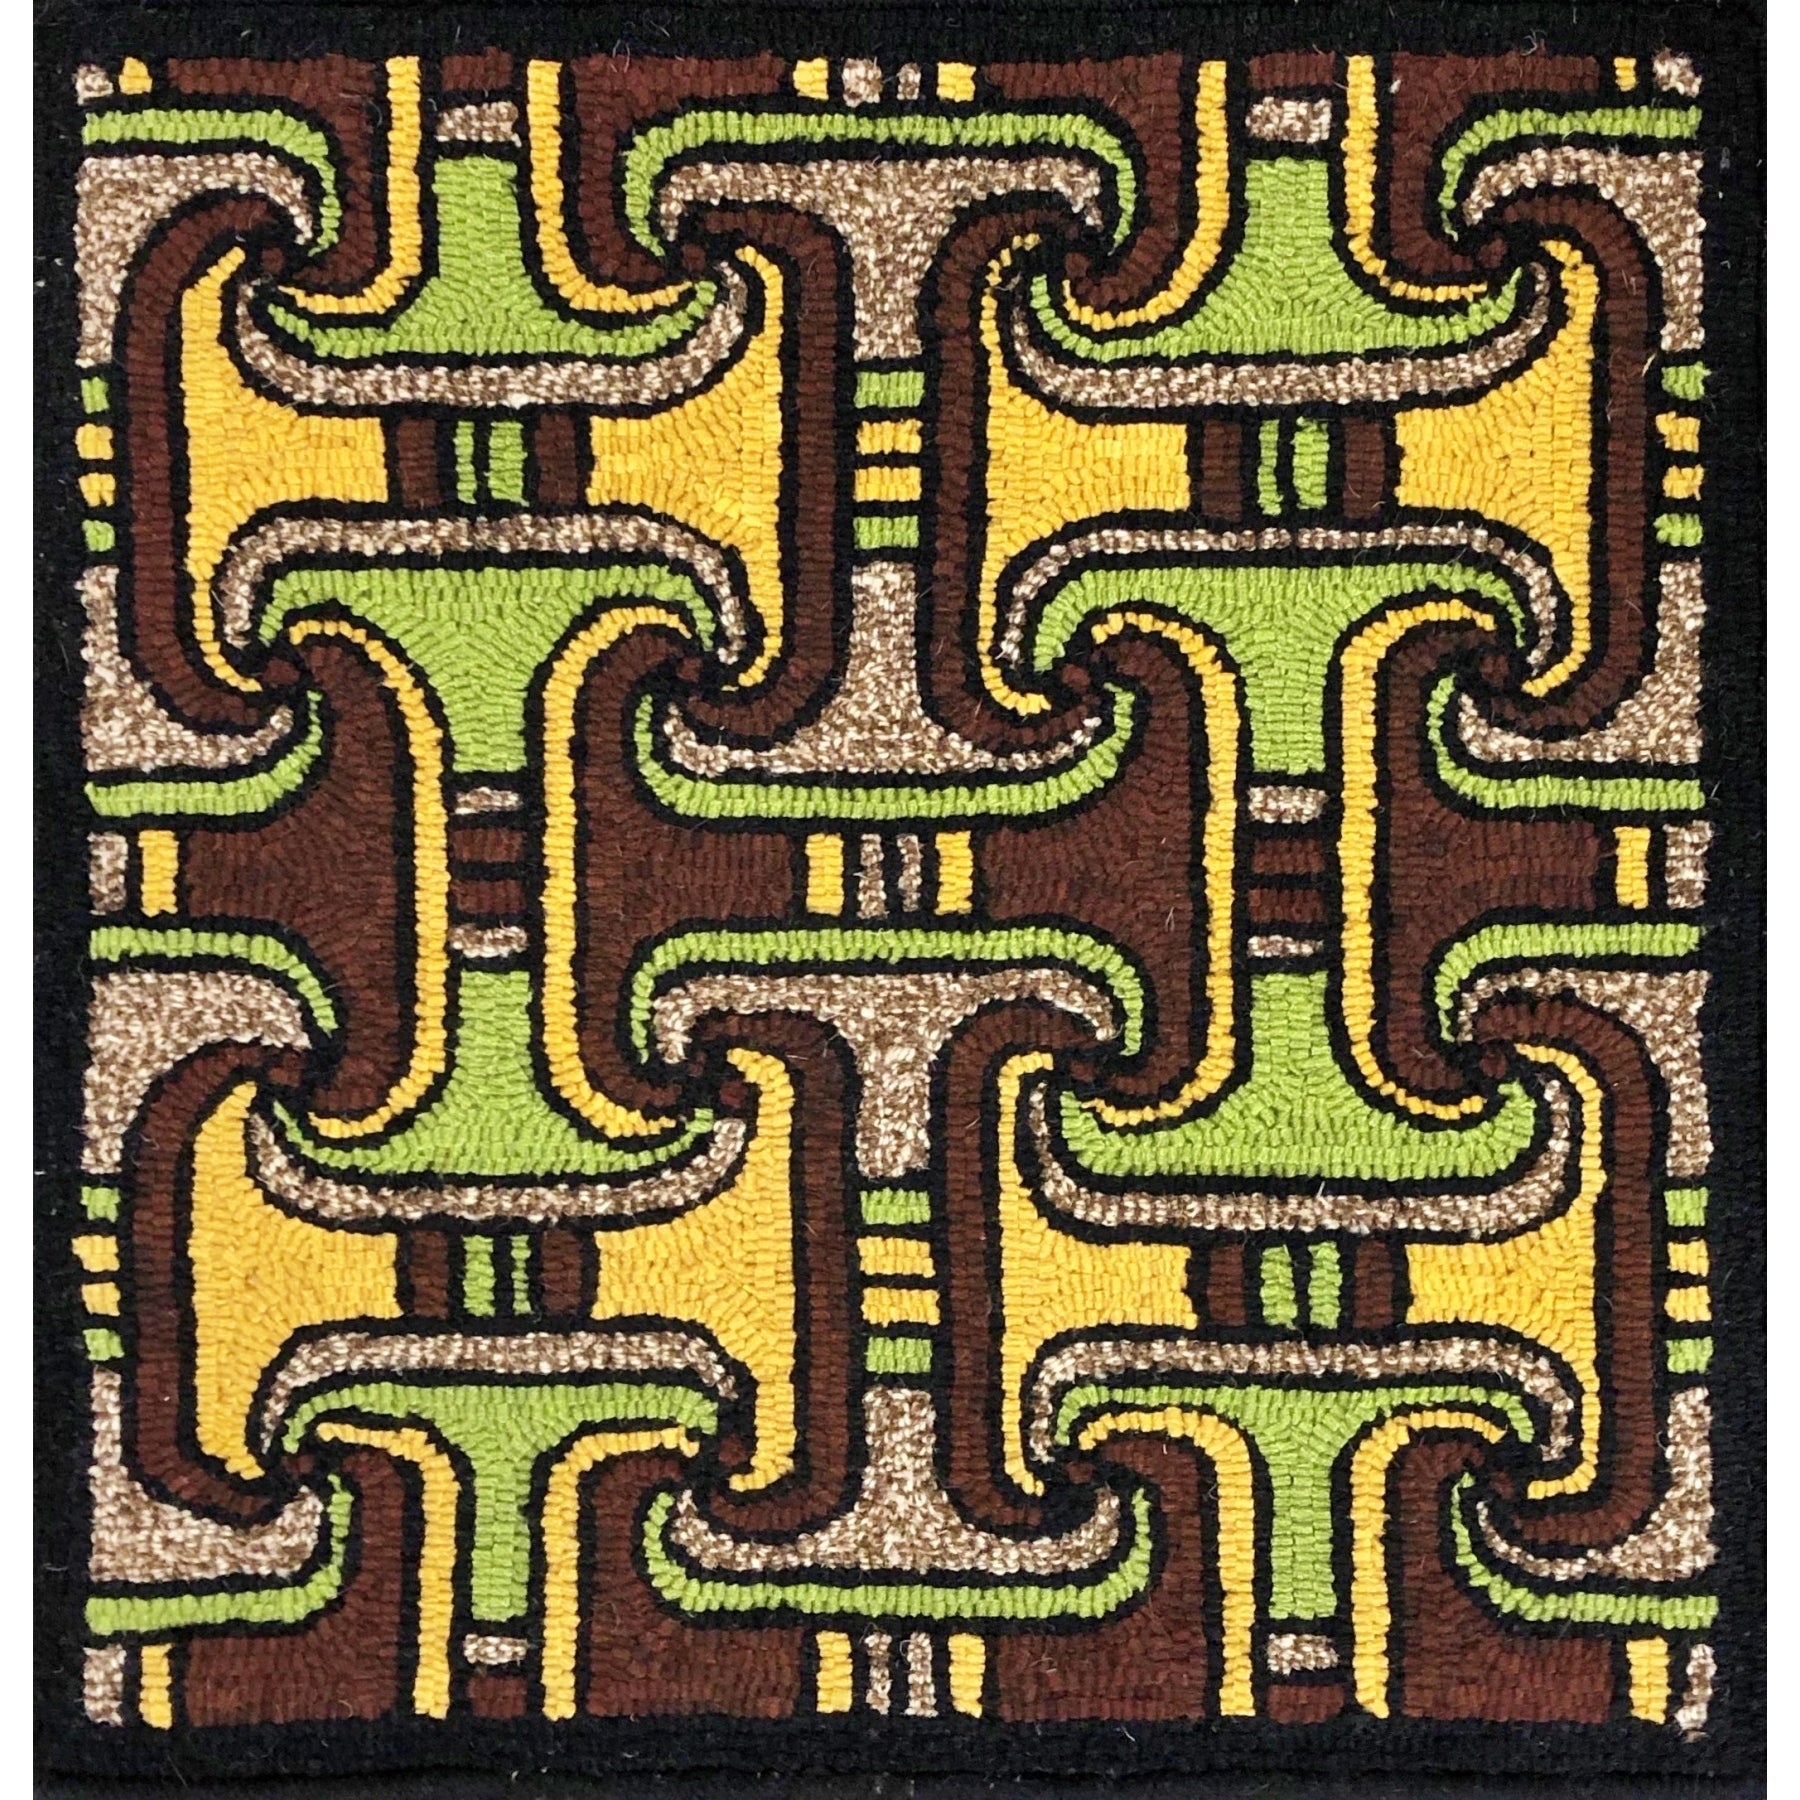 Symmetry, rug hooked by Karen Cormier